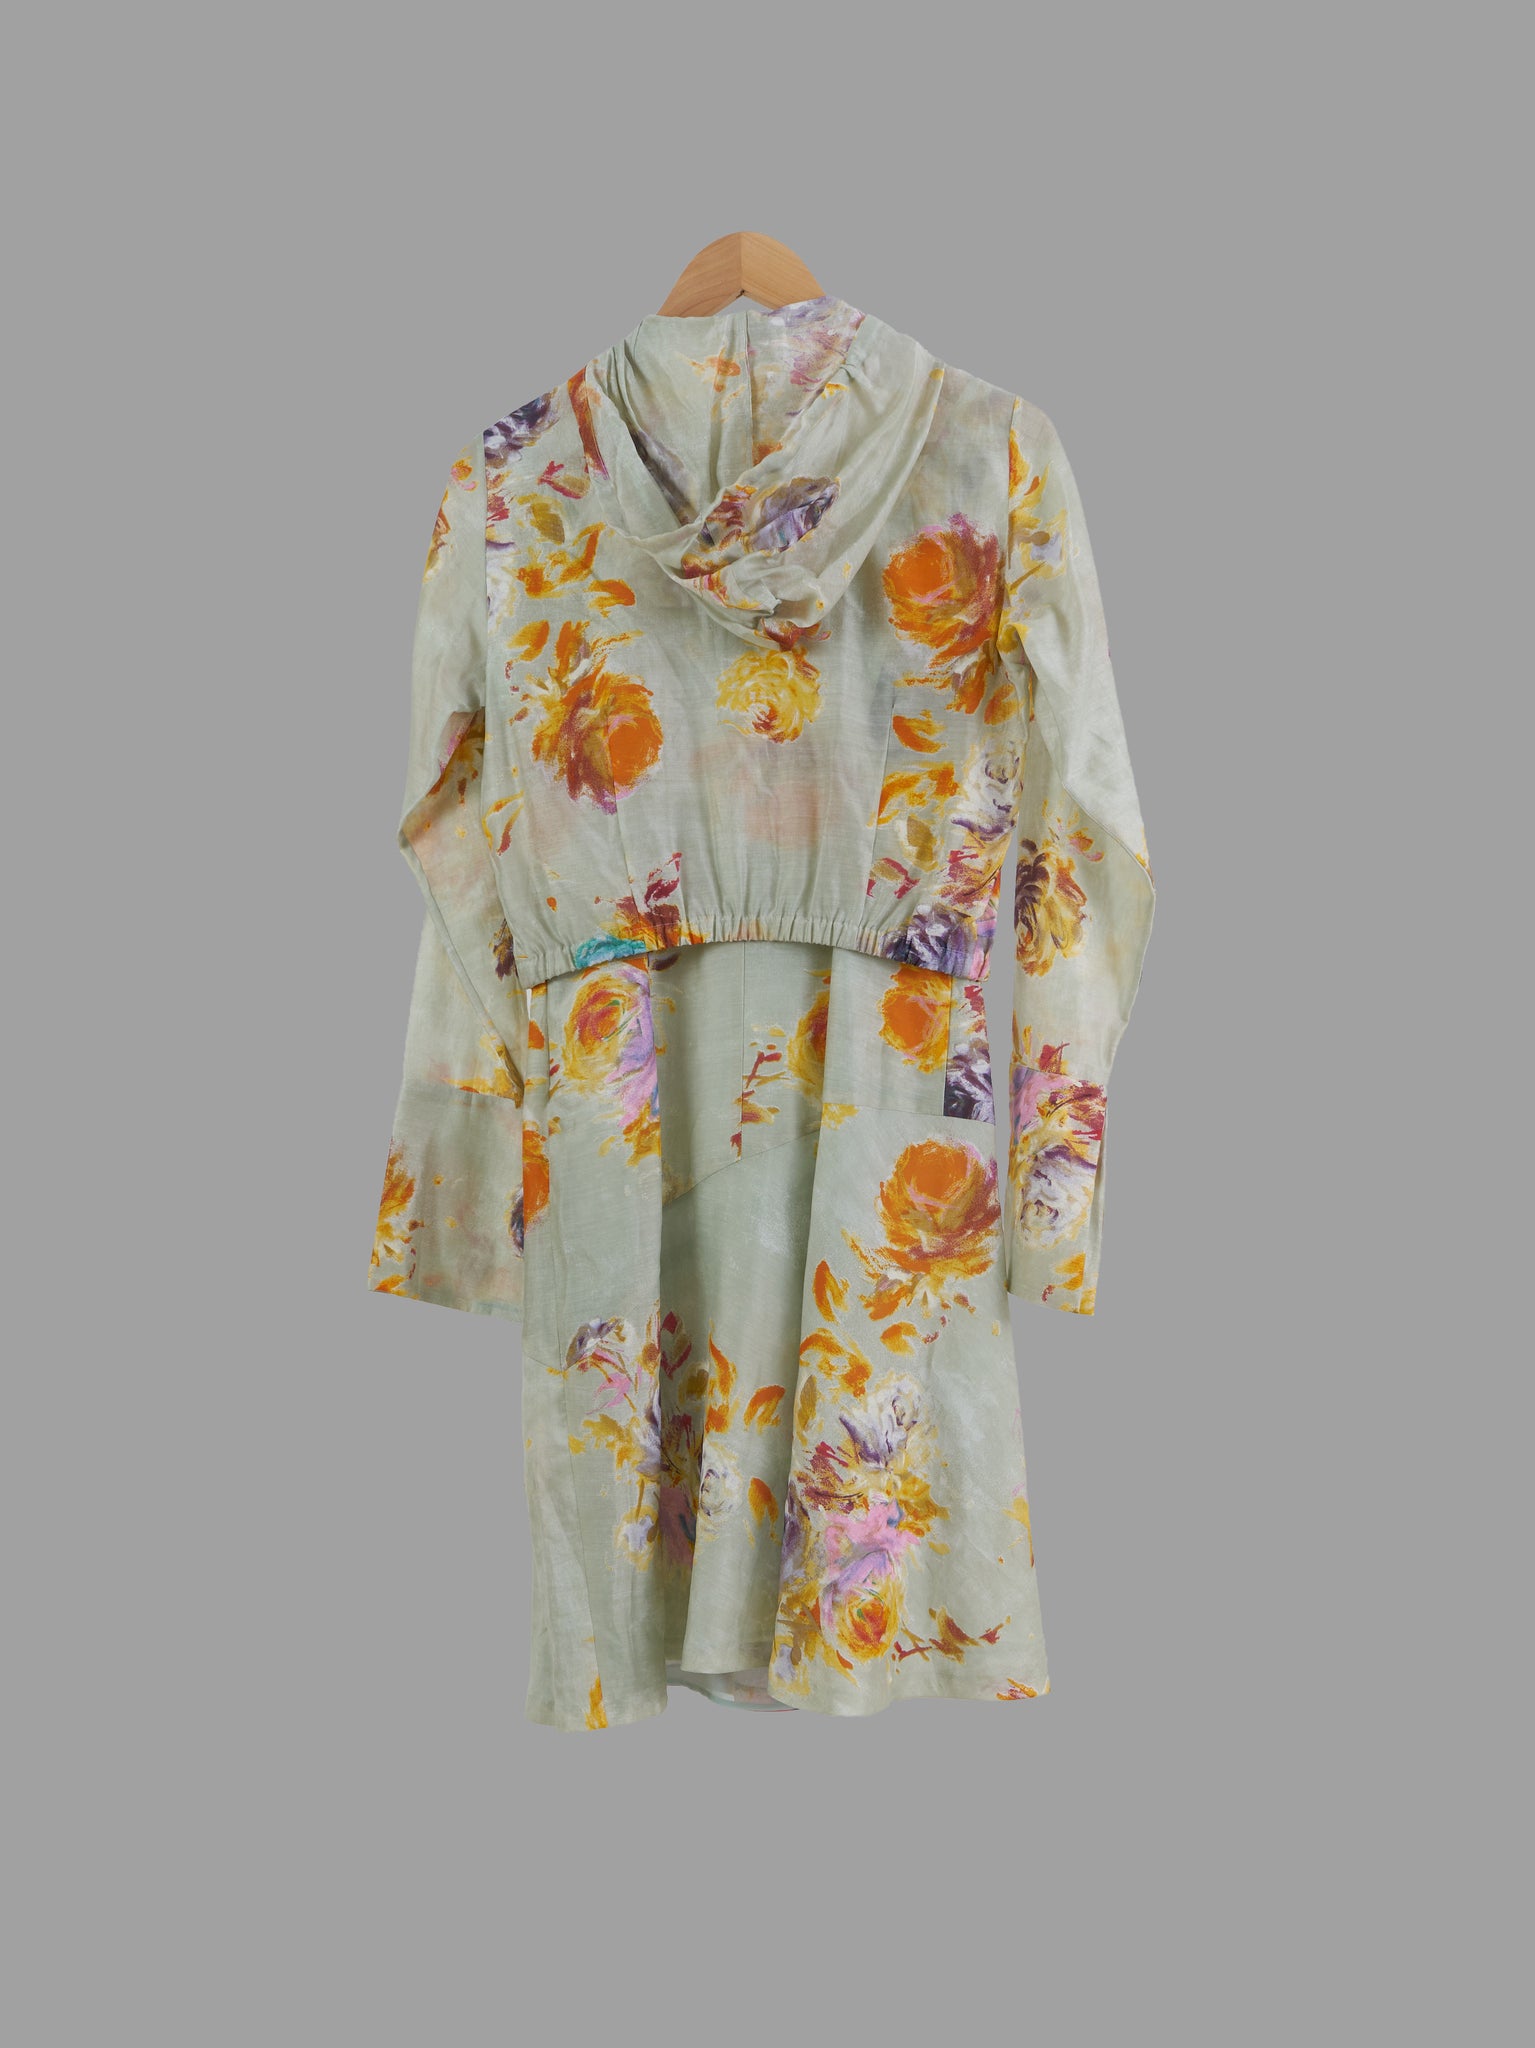 Kenzo sage green cotton silk floral pattern dress and jacket suit set - size 38